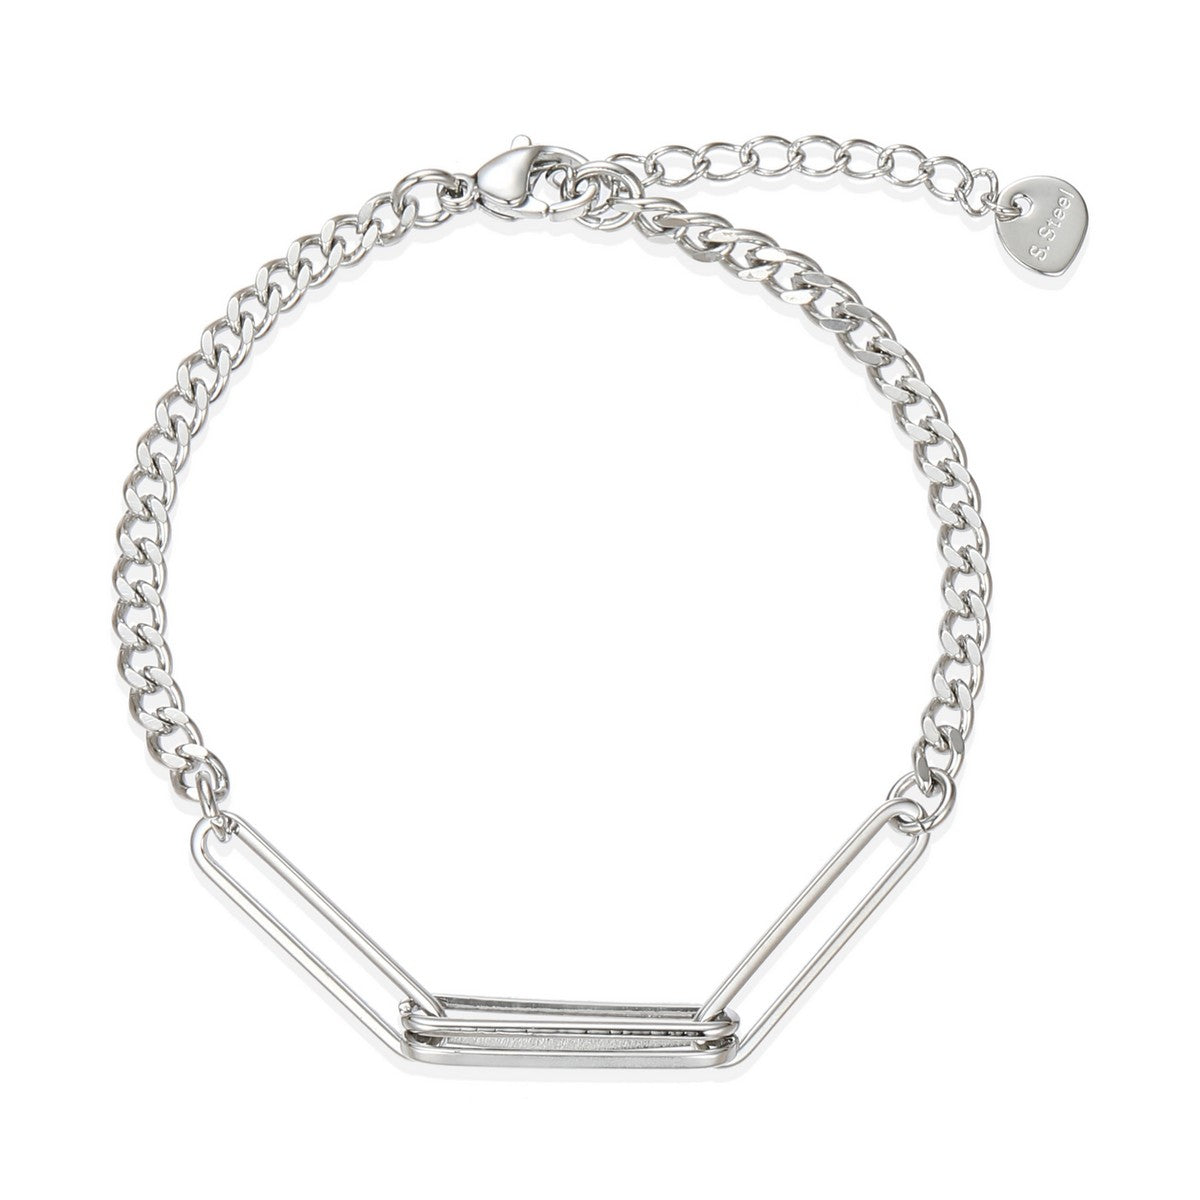 Minimalist Silver Chain Bracelet with Links YD12907SLR